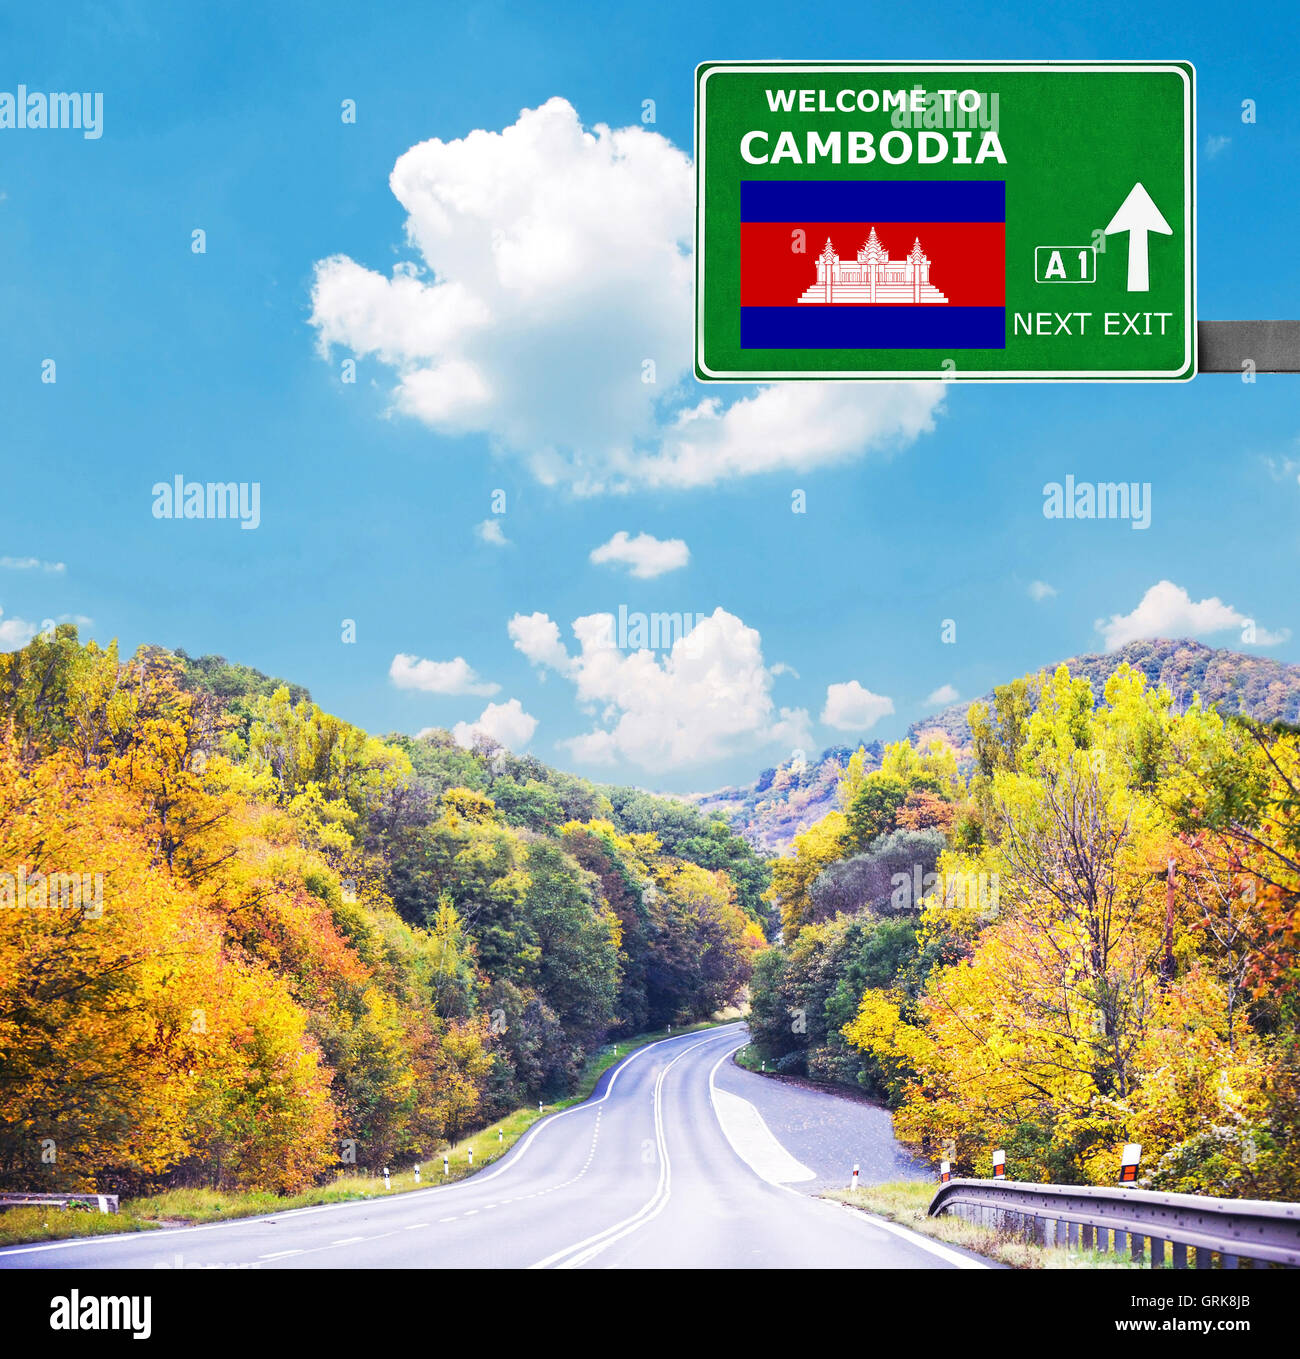 Kambodscha-Schild gegen klar blauen Himmel Stockfoto